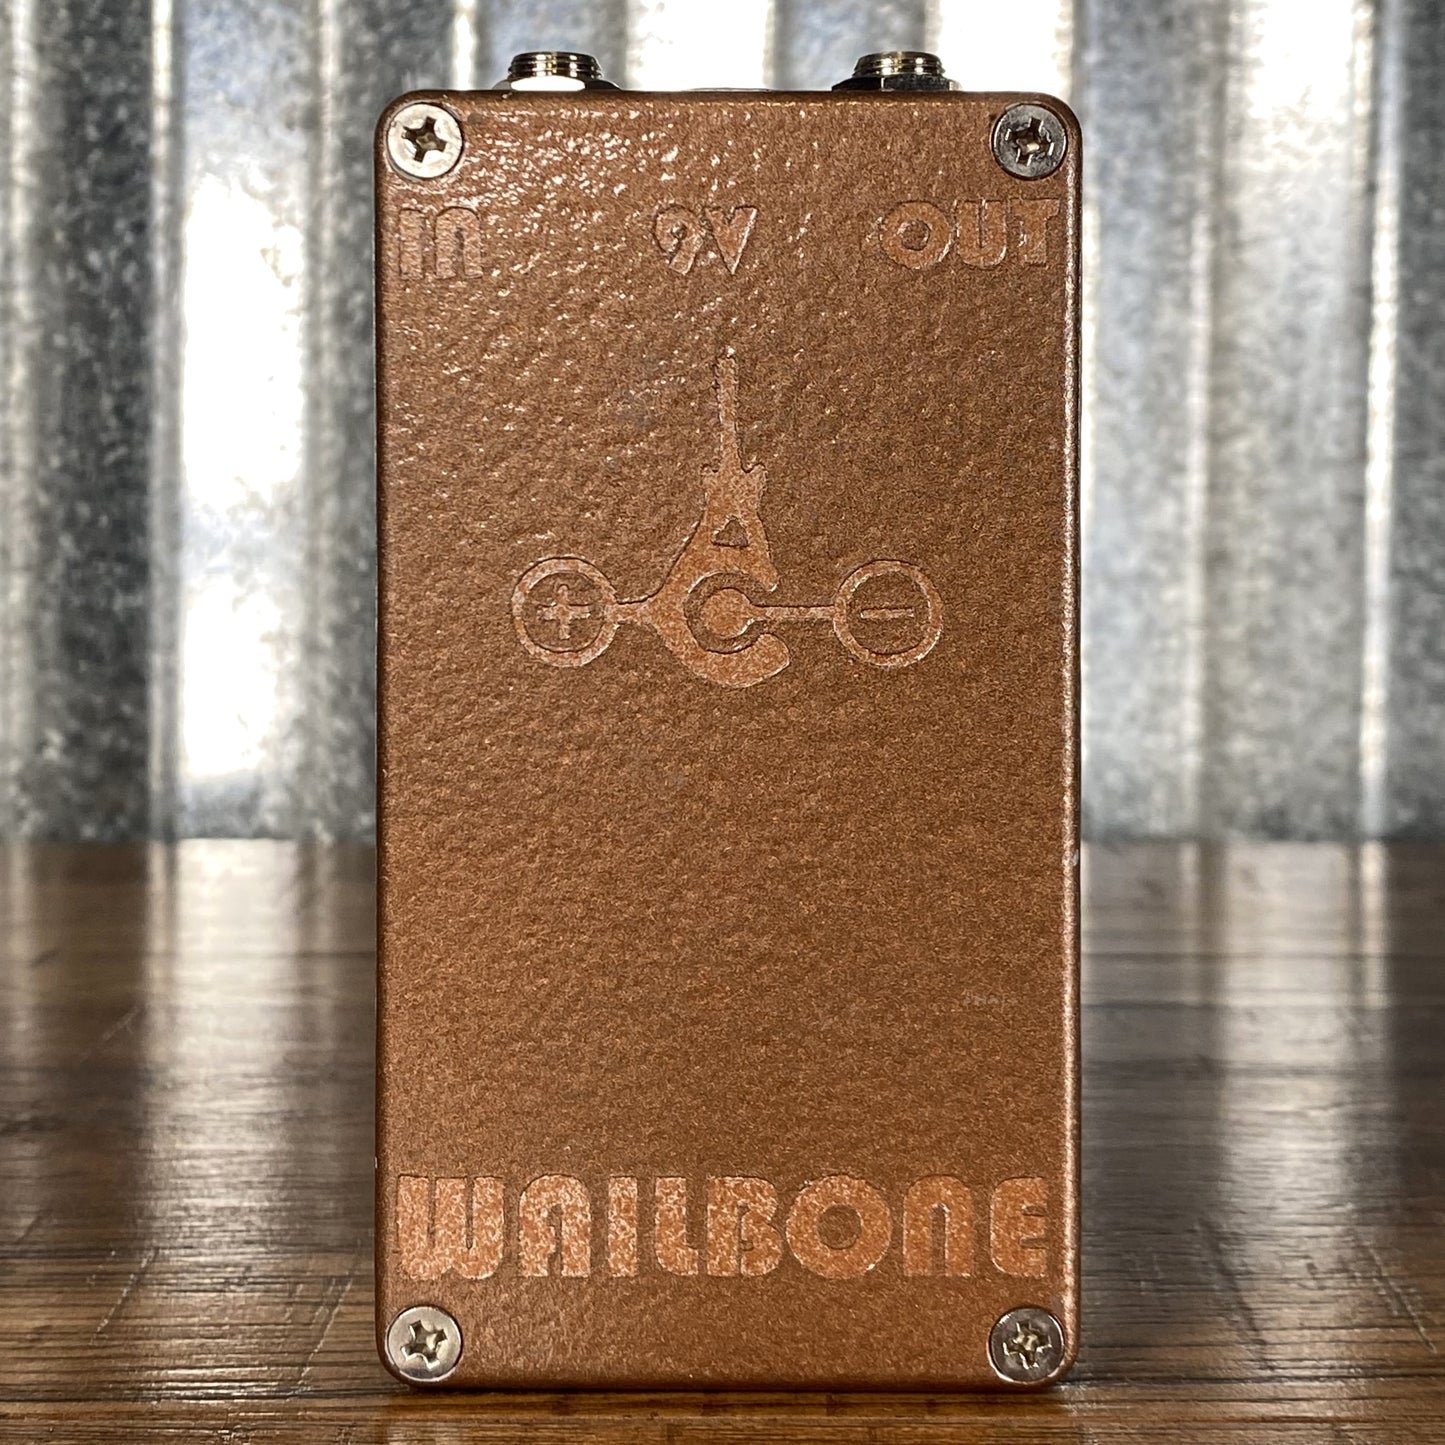 Wailbone Labs Fuzz Factory Clone Guitar Effect Pedal Used